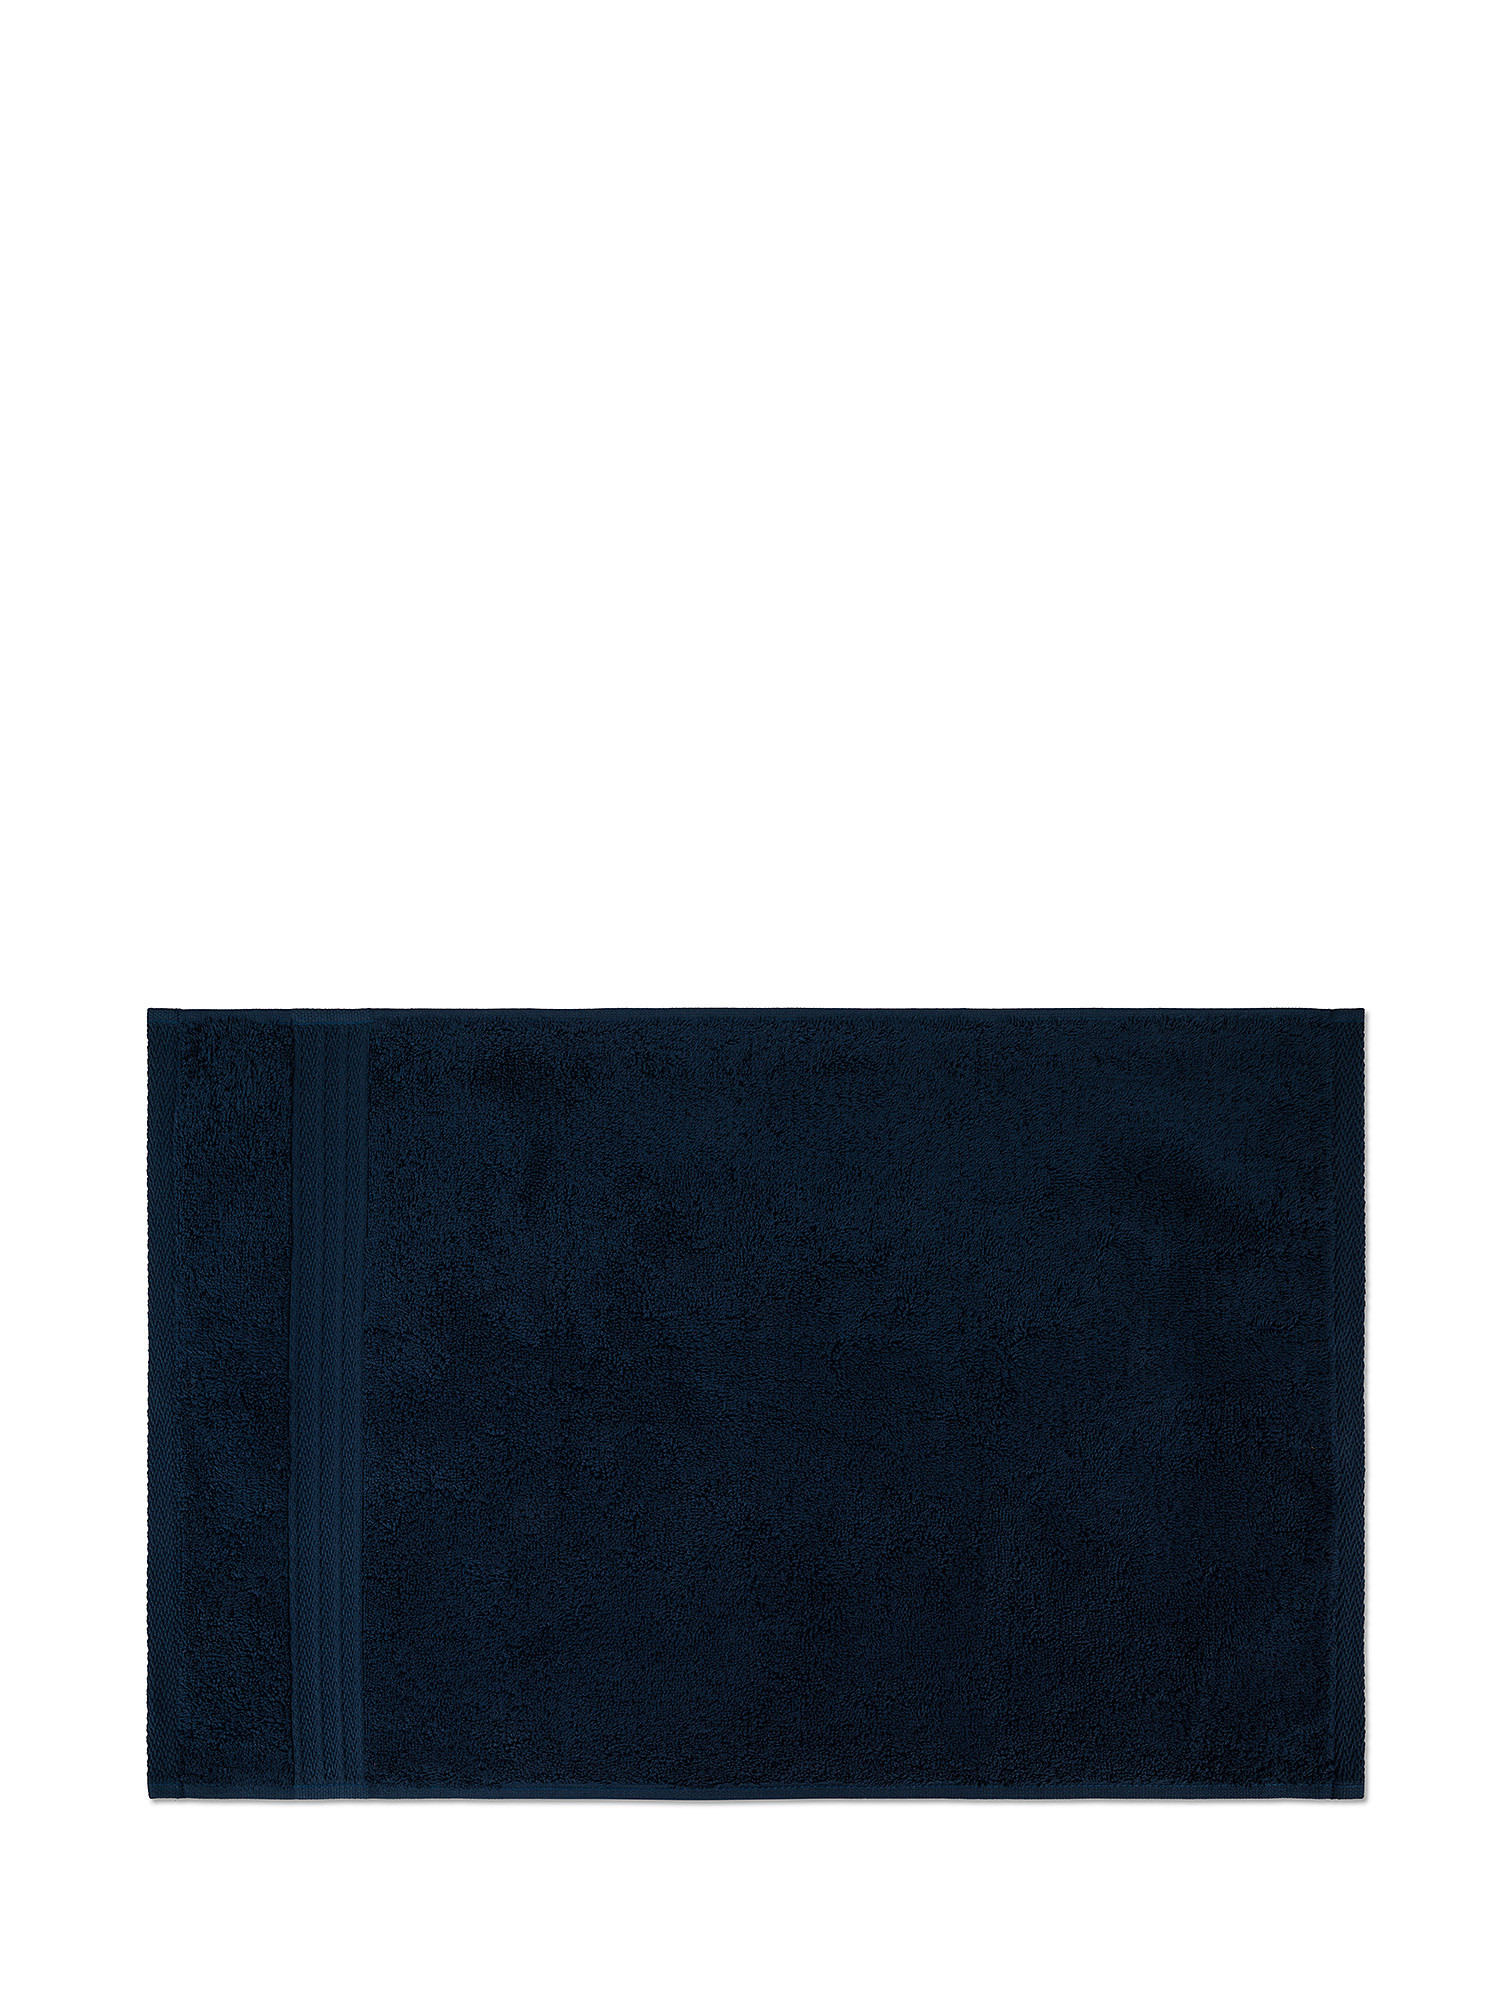 Asciugamano puro cotone tinta unita Zefiro, Blu scuro, large image number 1